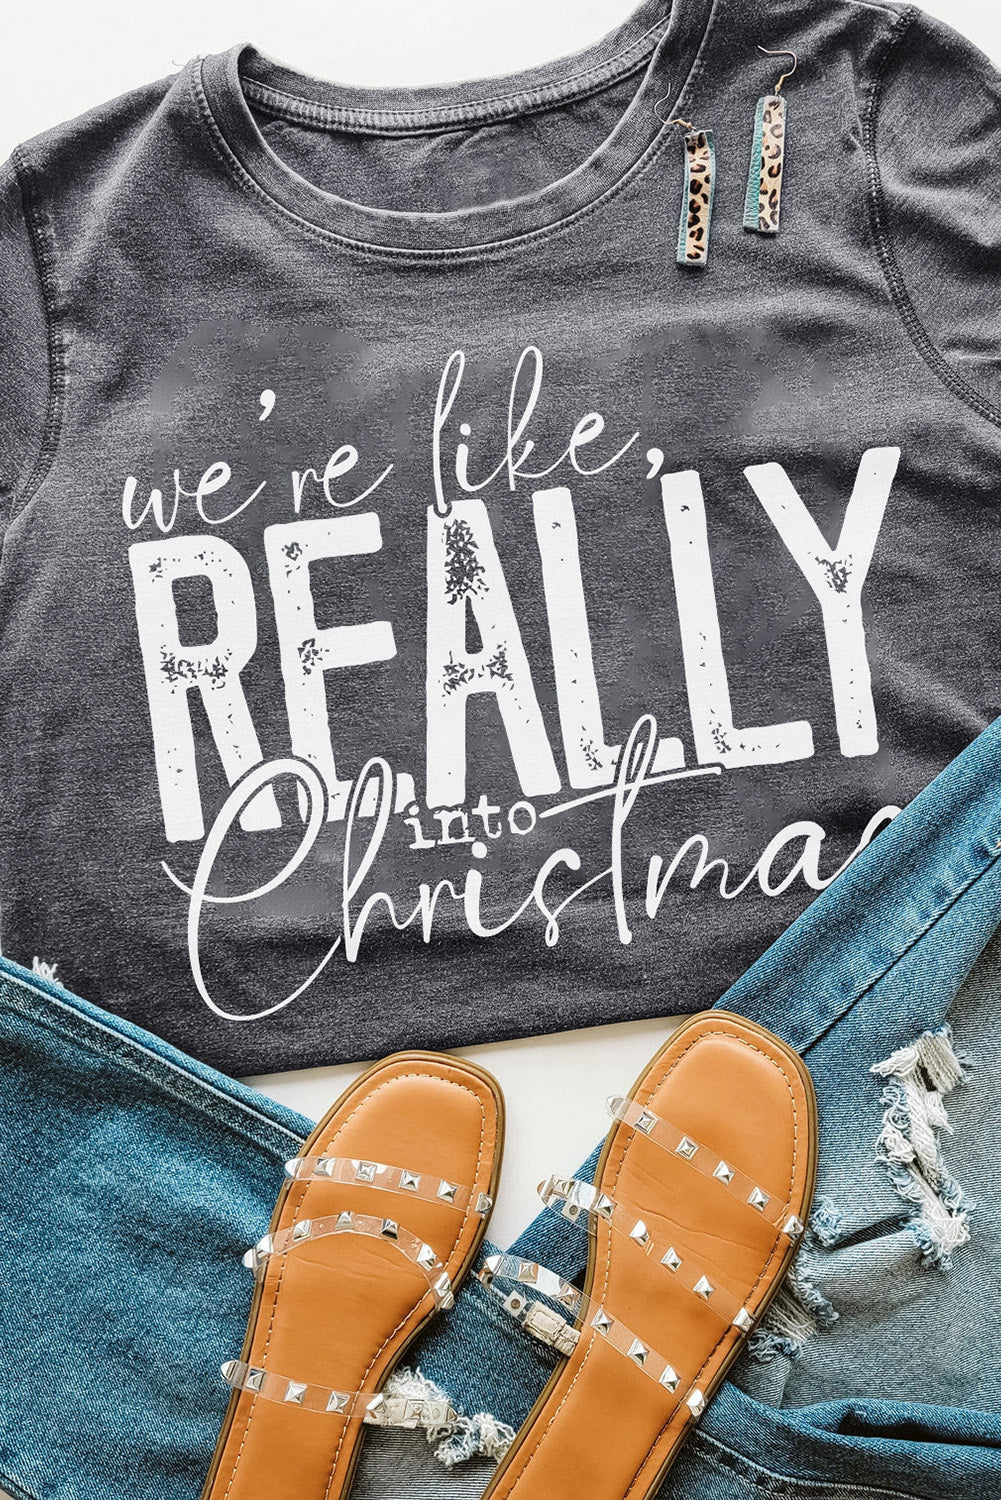 REALLY Christmas Graphic Print Short Sleeve T Shirt